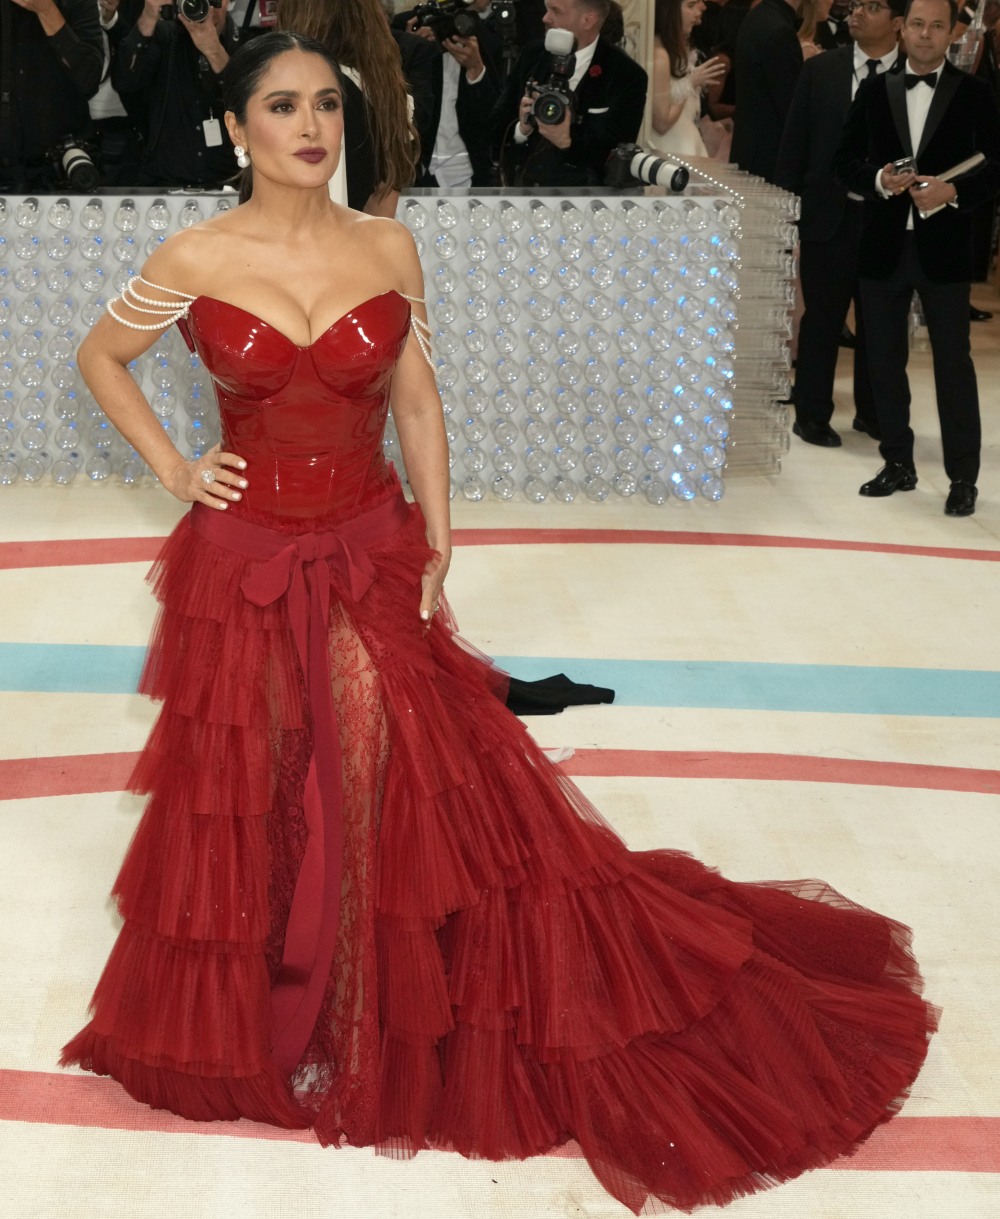 şirret | Yeni sarışın Jessica Chastain, Met Gala'da Gucci giydi: muhteşem mi?